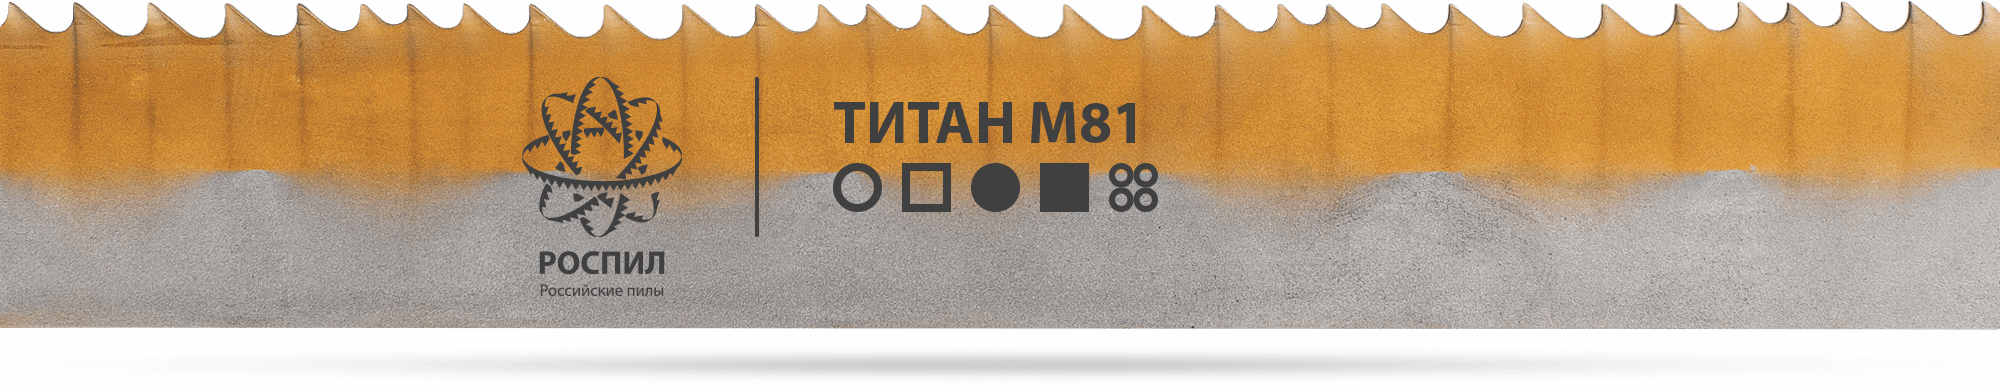 РОСПИЛ Титан М81